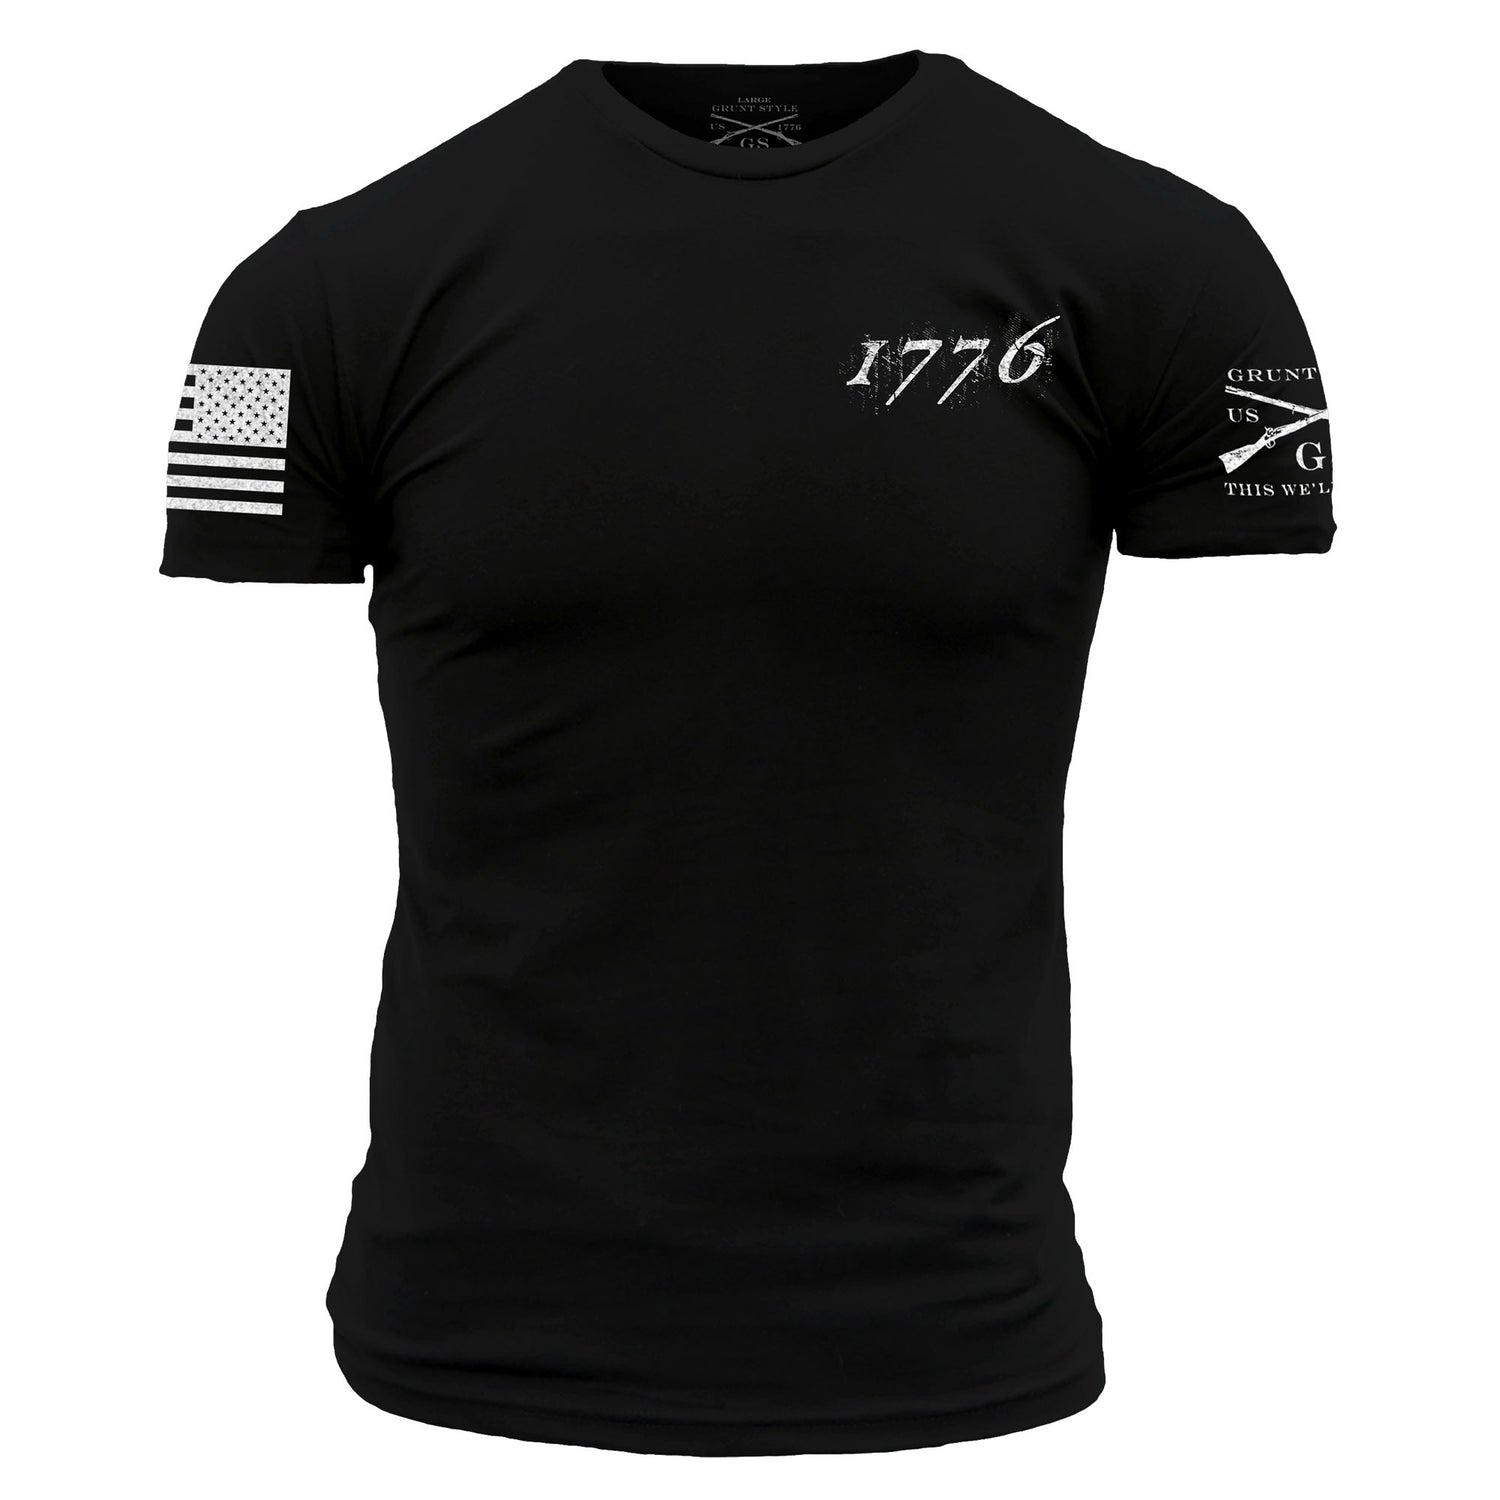 1776 Flag T-shirts | Patriotic Shirts for Men